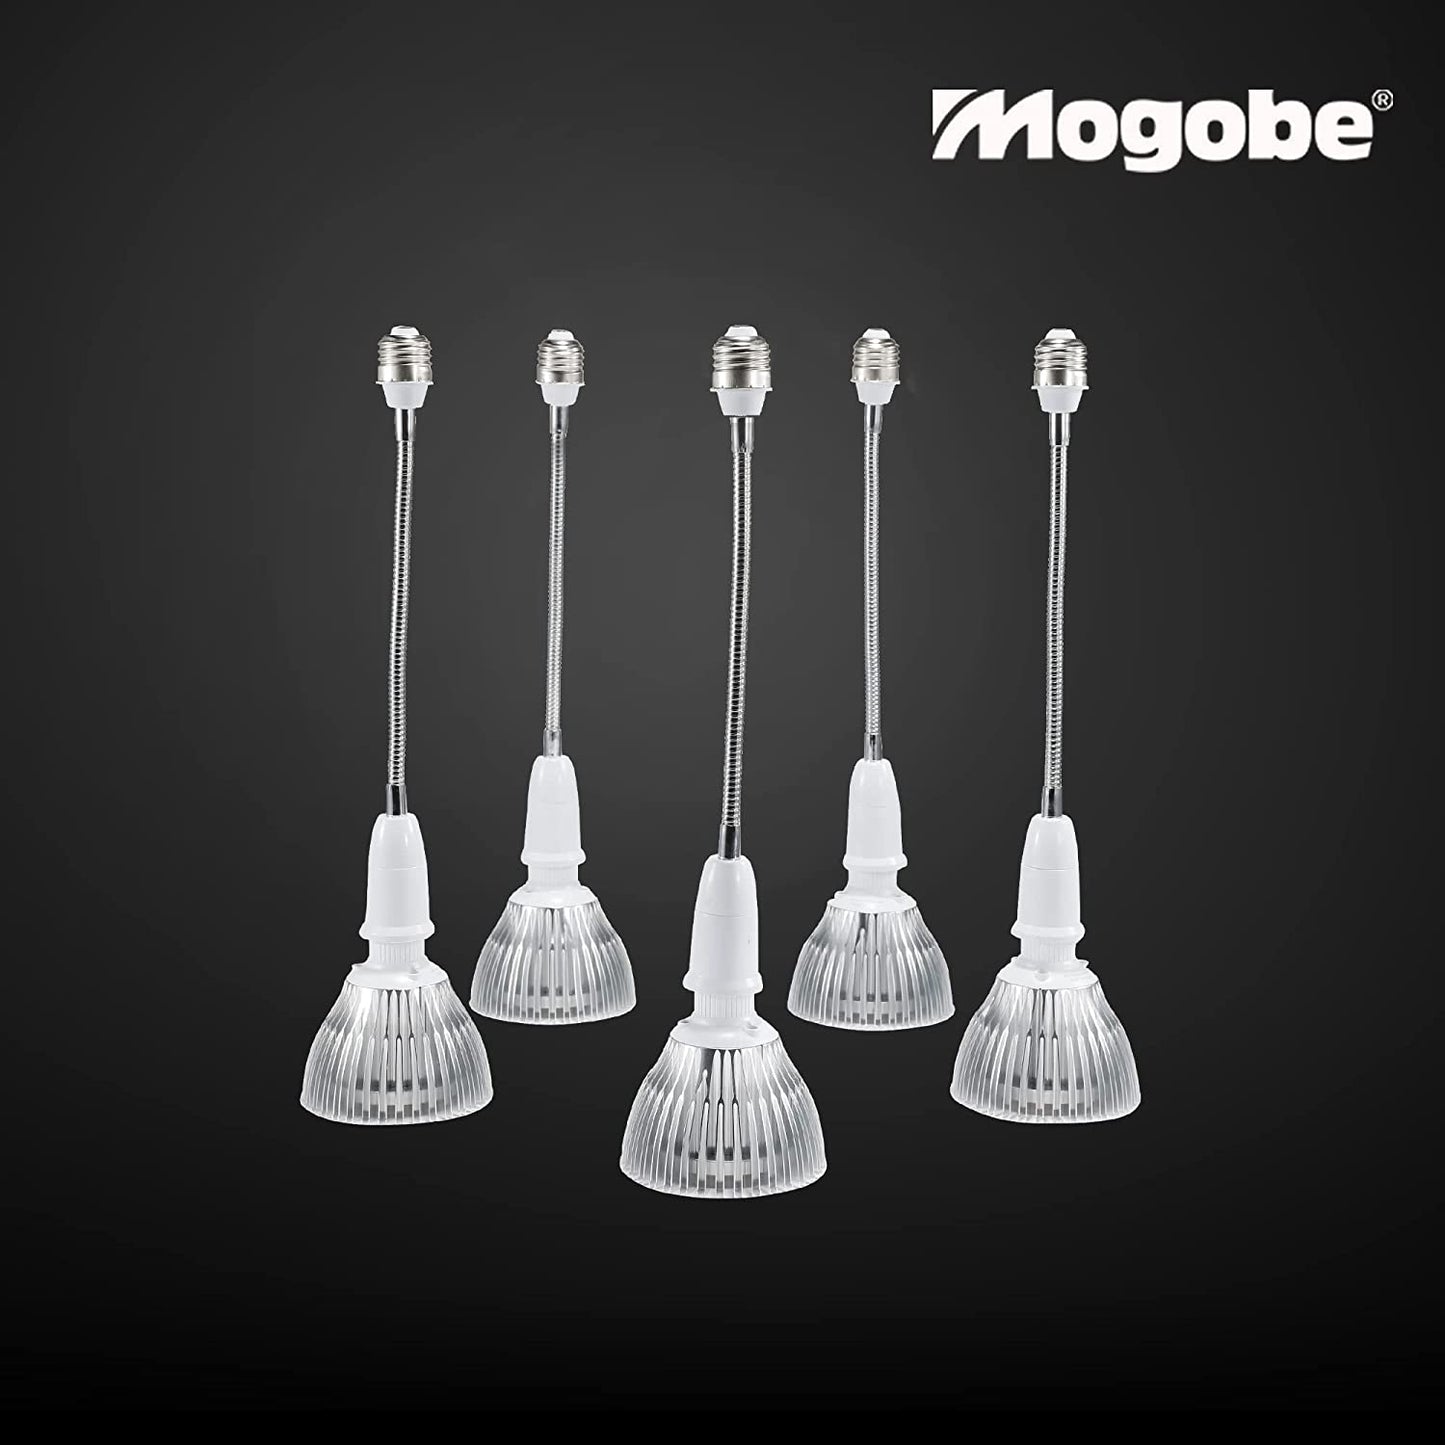 5 units of mogobe 20w grow light